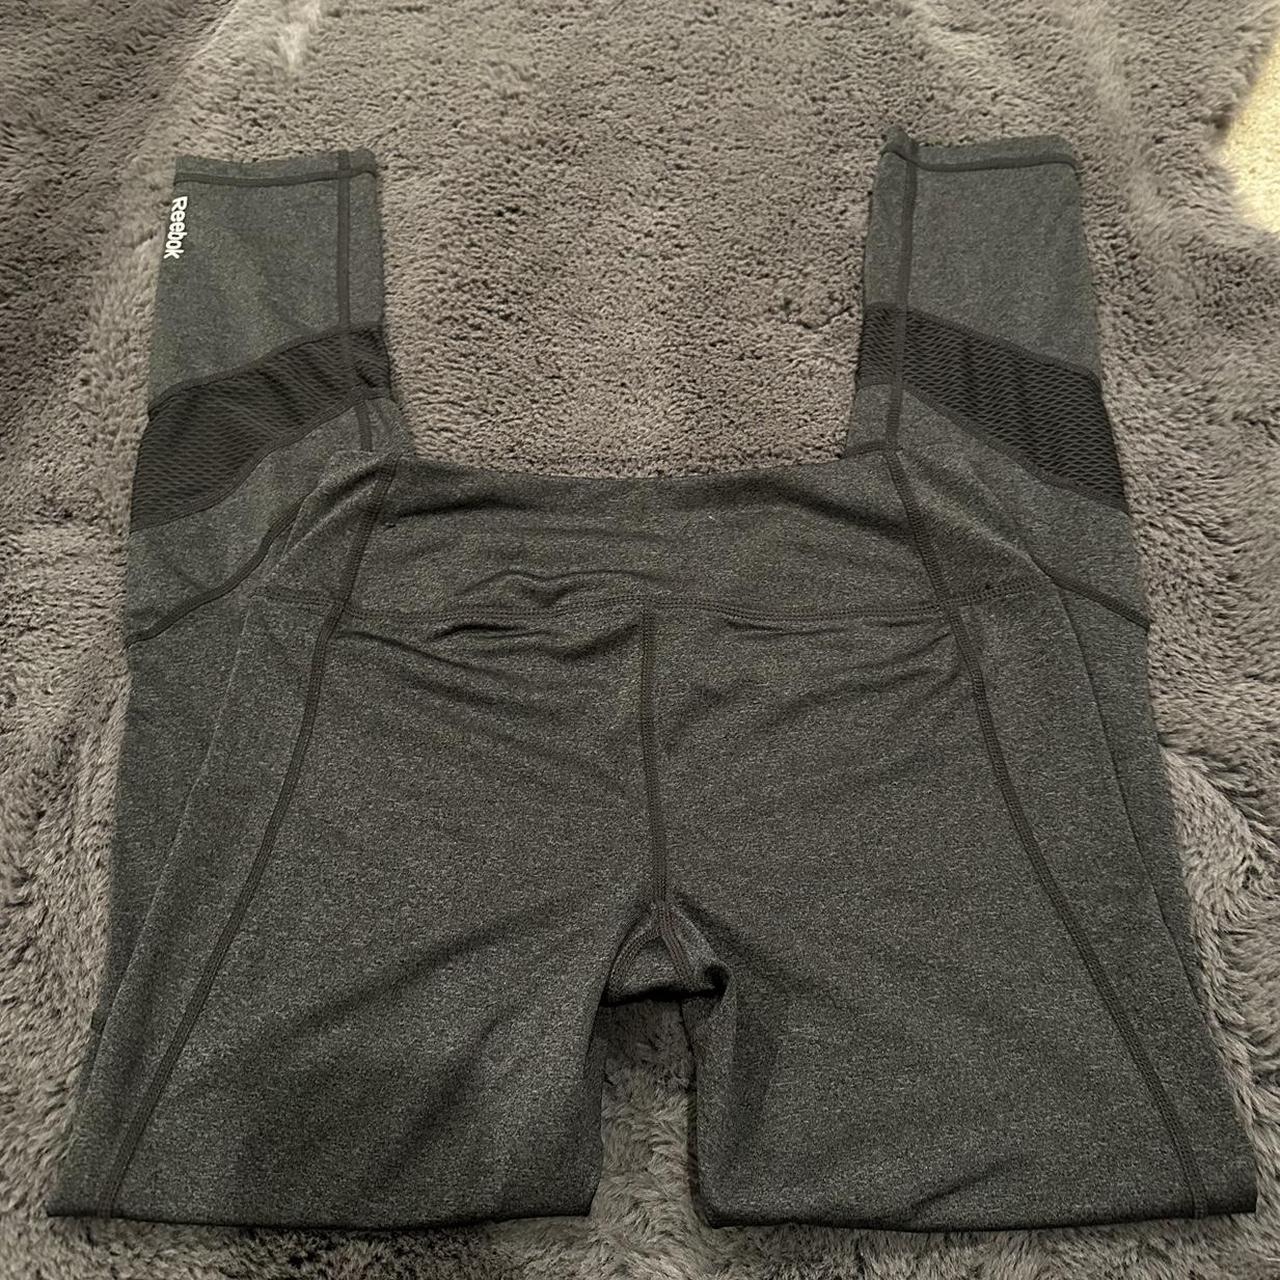 Reebok gym leggings in dark grey size Xs #reebok - Depop